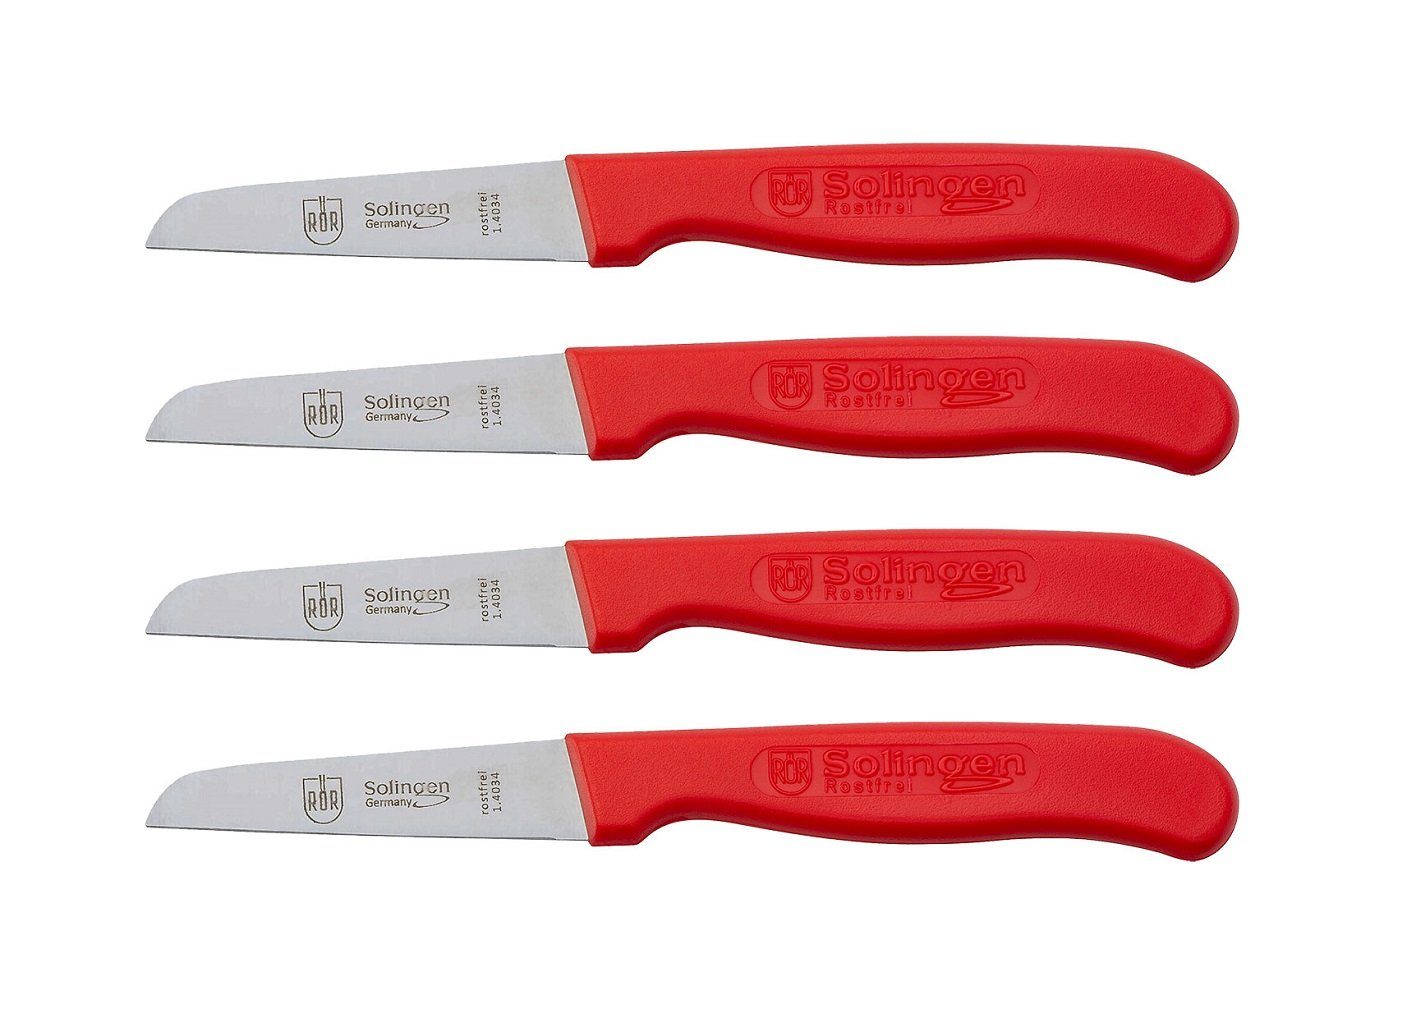 RÖR Messer-Set 10121, Küchenmesser gerade, rot - 4-teilig, hochwertiger, rostfreier Stahl - Made in Solingen